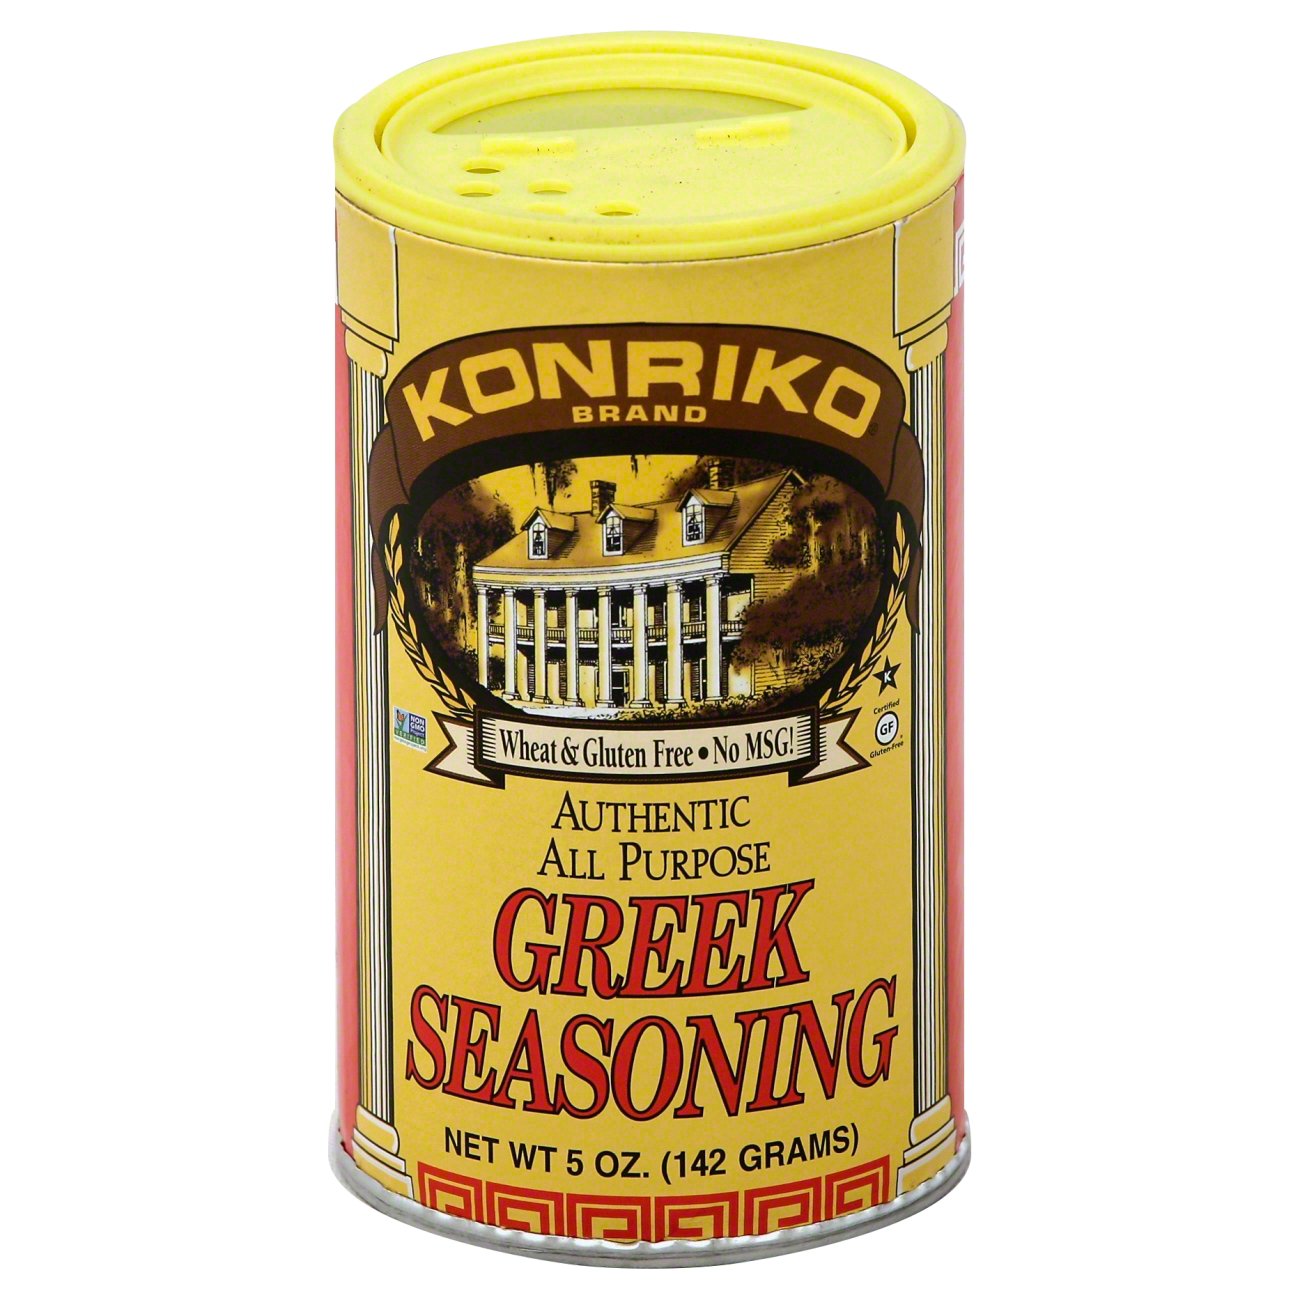 Konriko Authentic All Purpose Greek Seasoning - Shop Spice Mixes at H-E-B